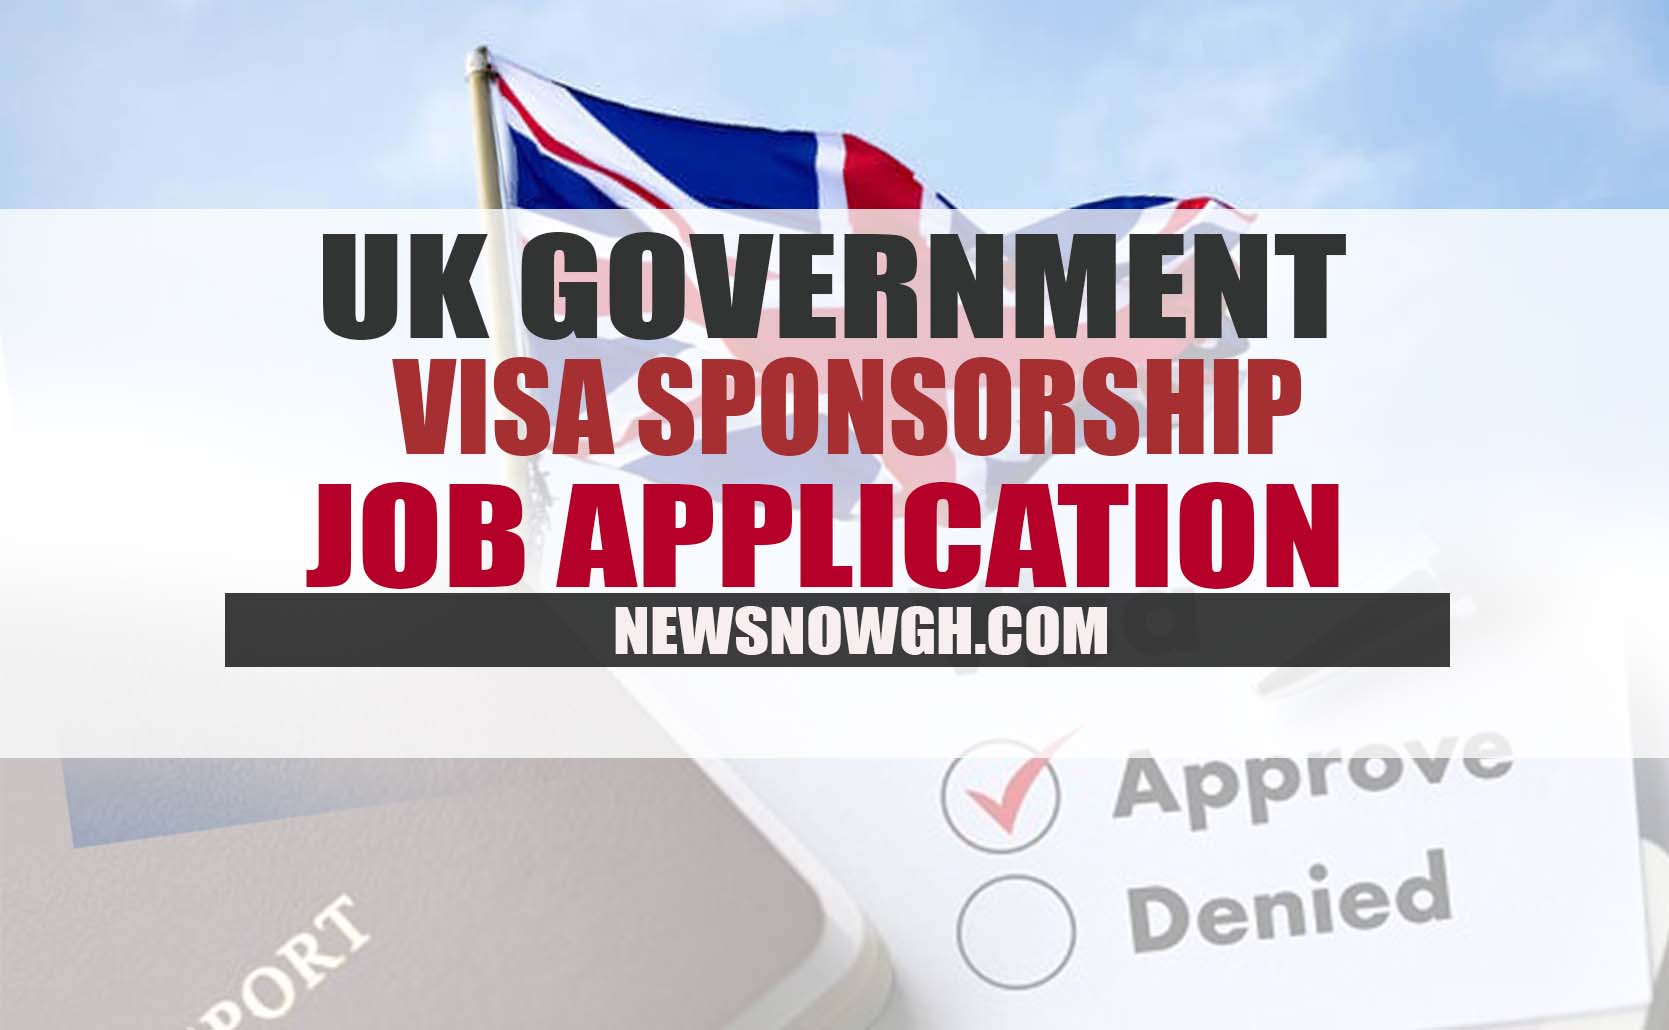 UK GOVERNMENT VISA SPONSORSHIP JOB APPLICATION